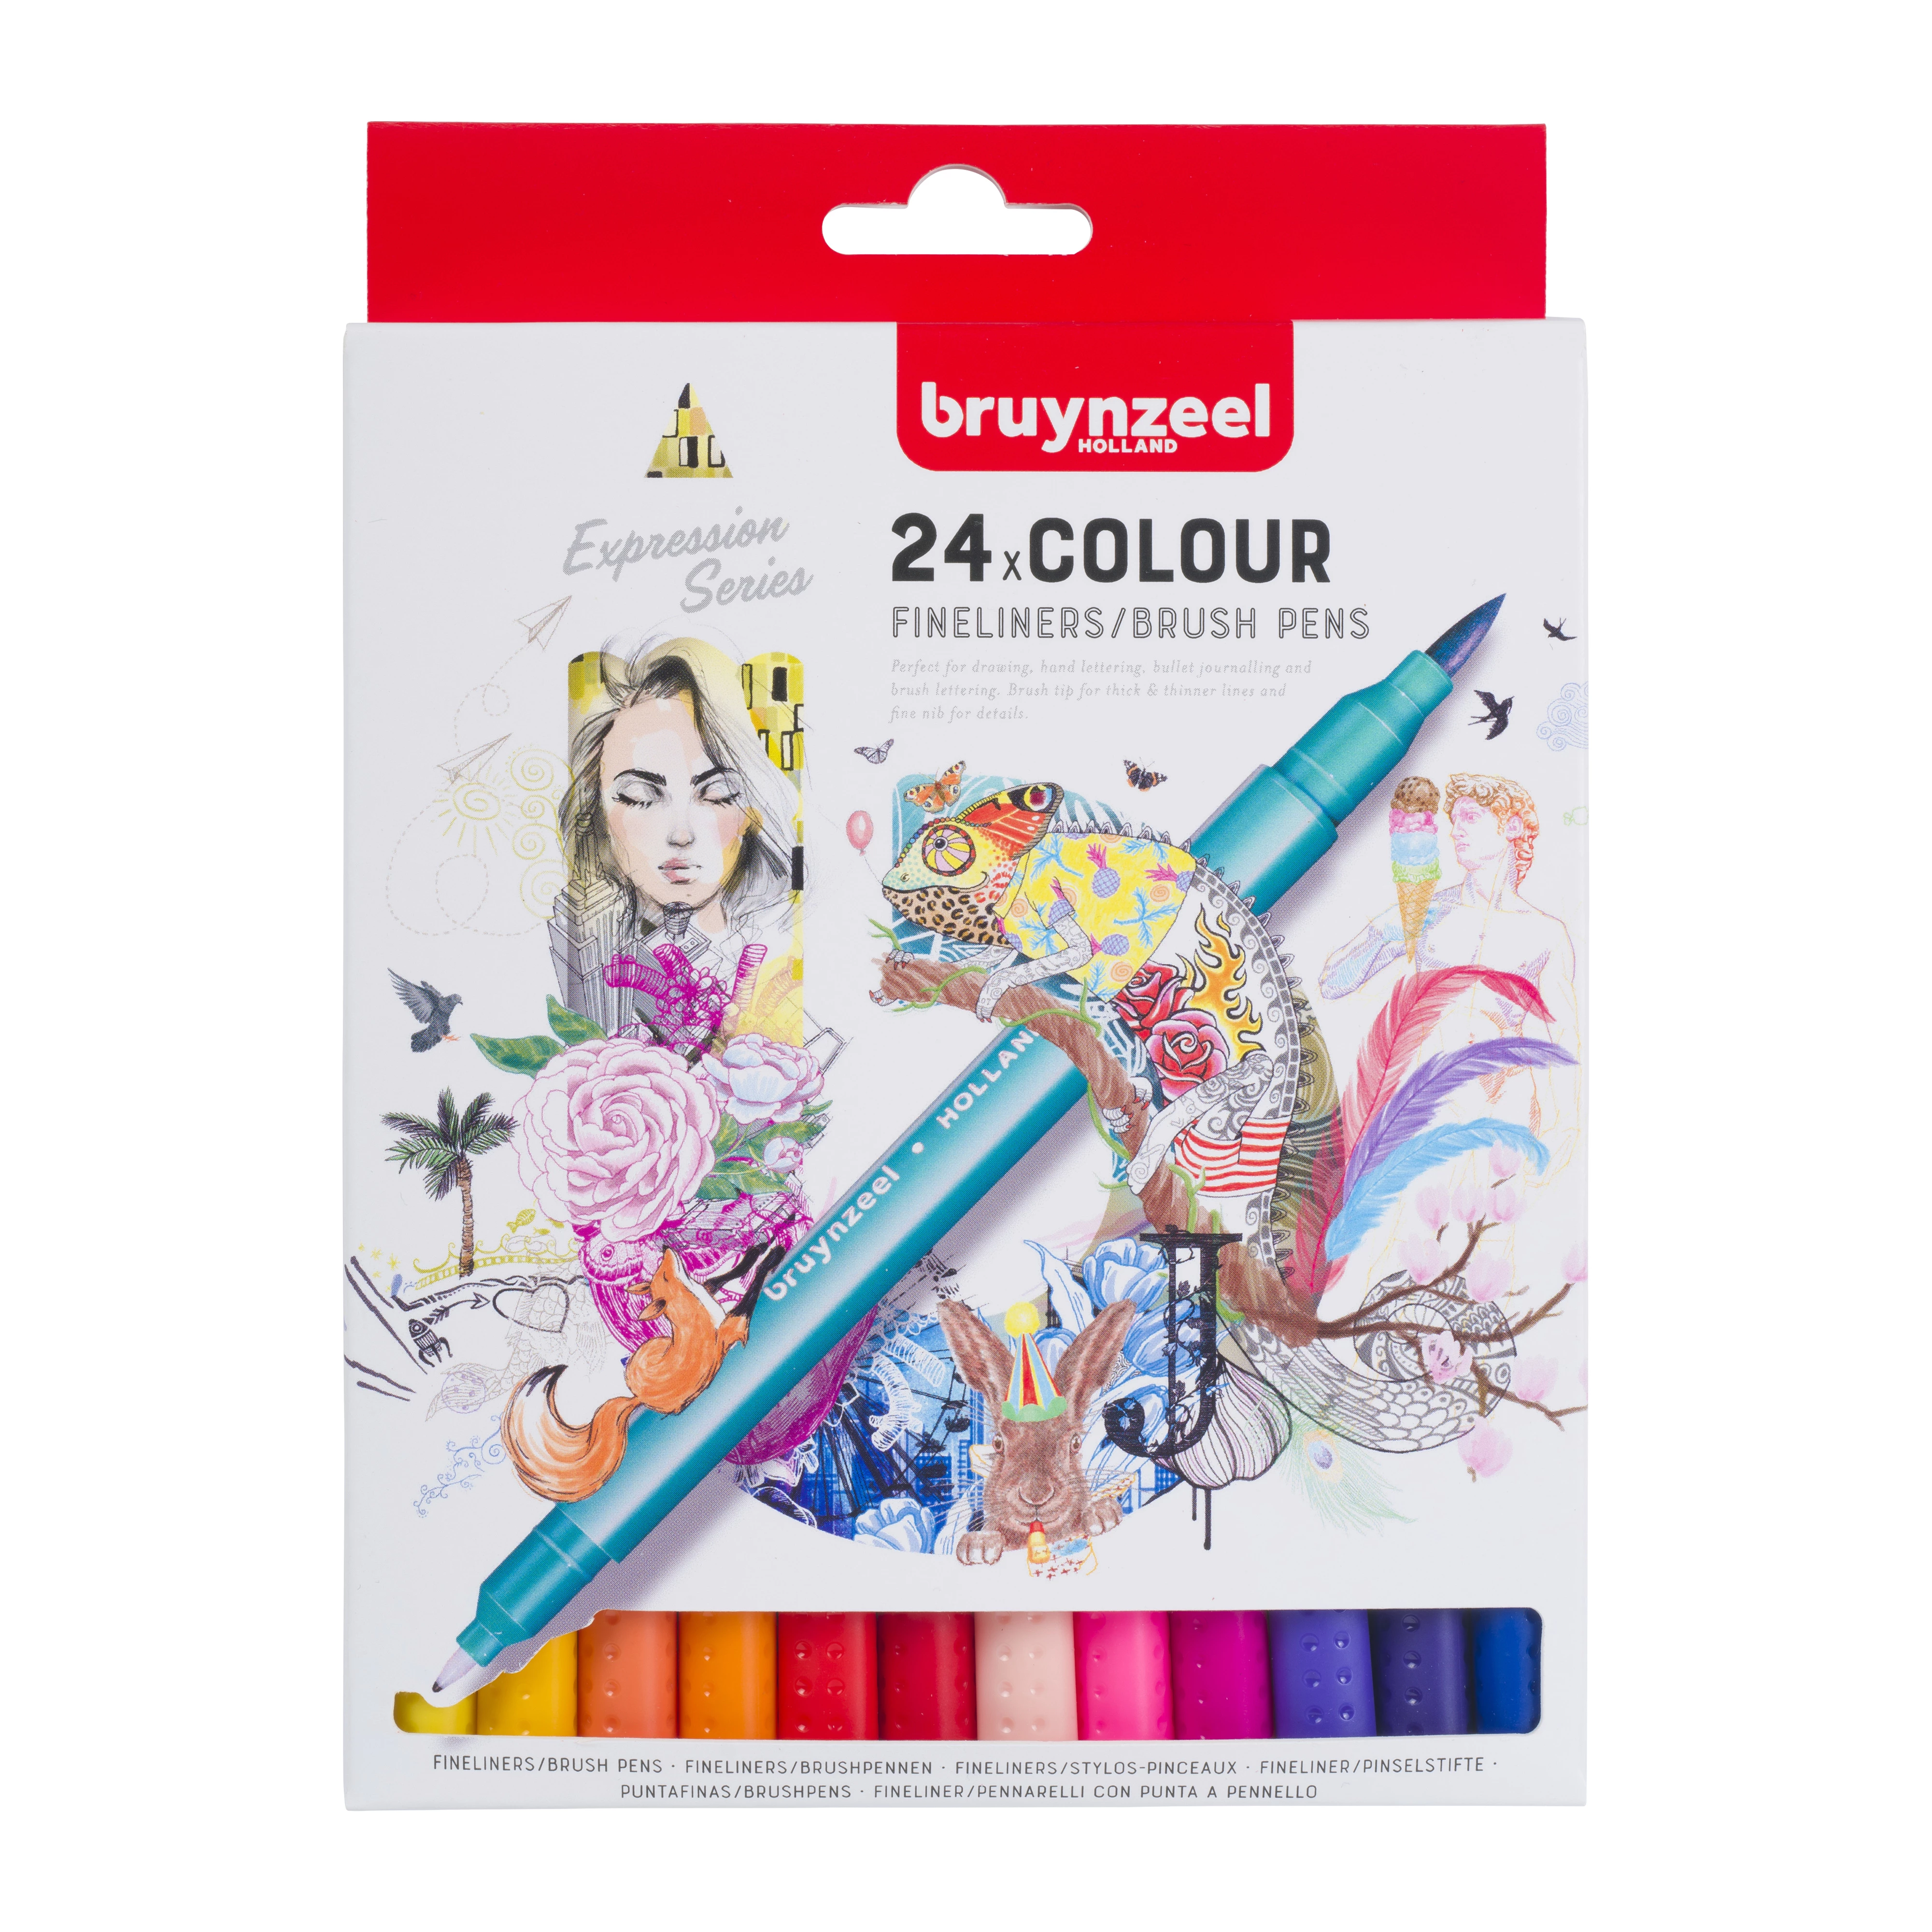 Bruynzeel Creatives puntafina / puntapincel 24 colores 